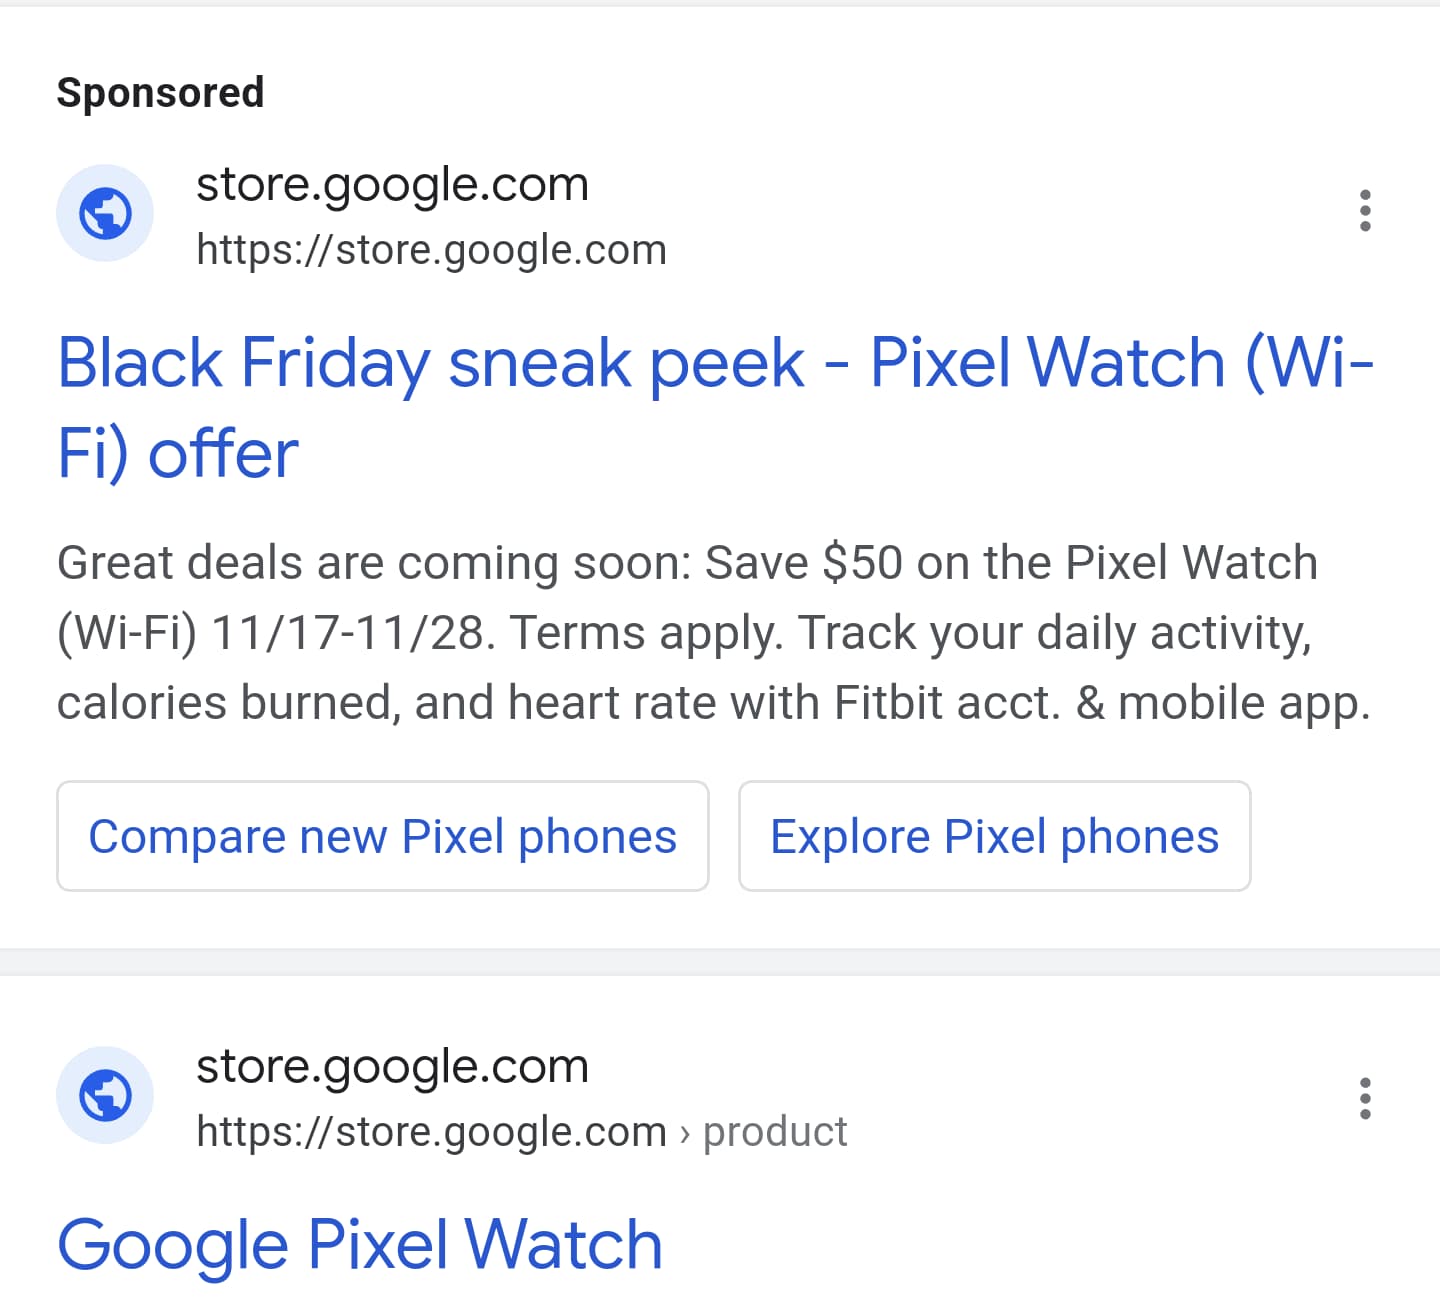 Pixel Watch Black Friday